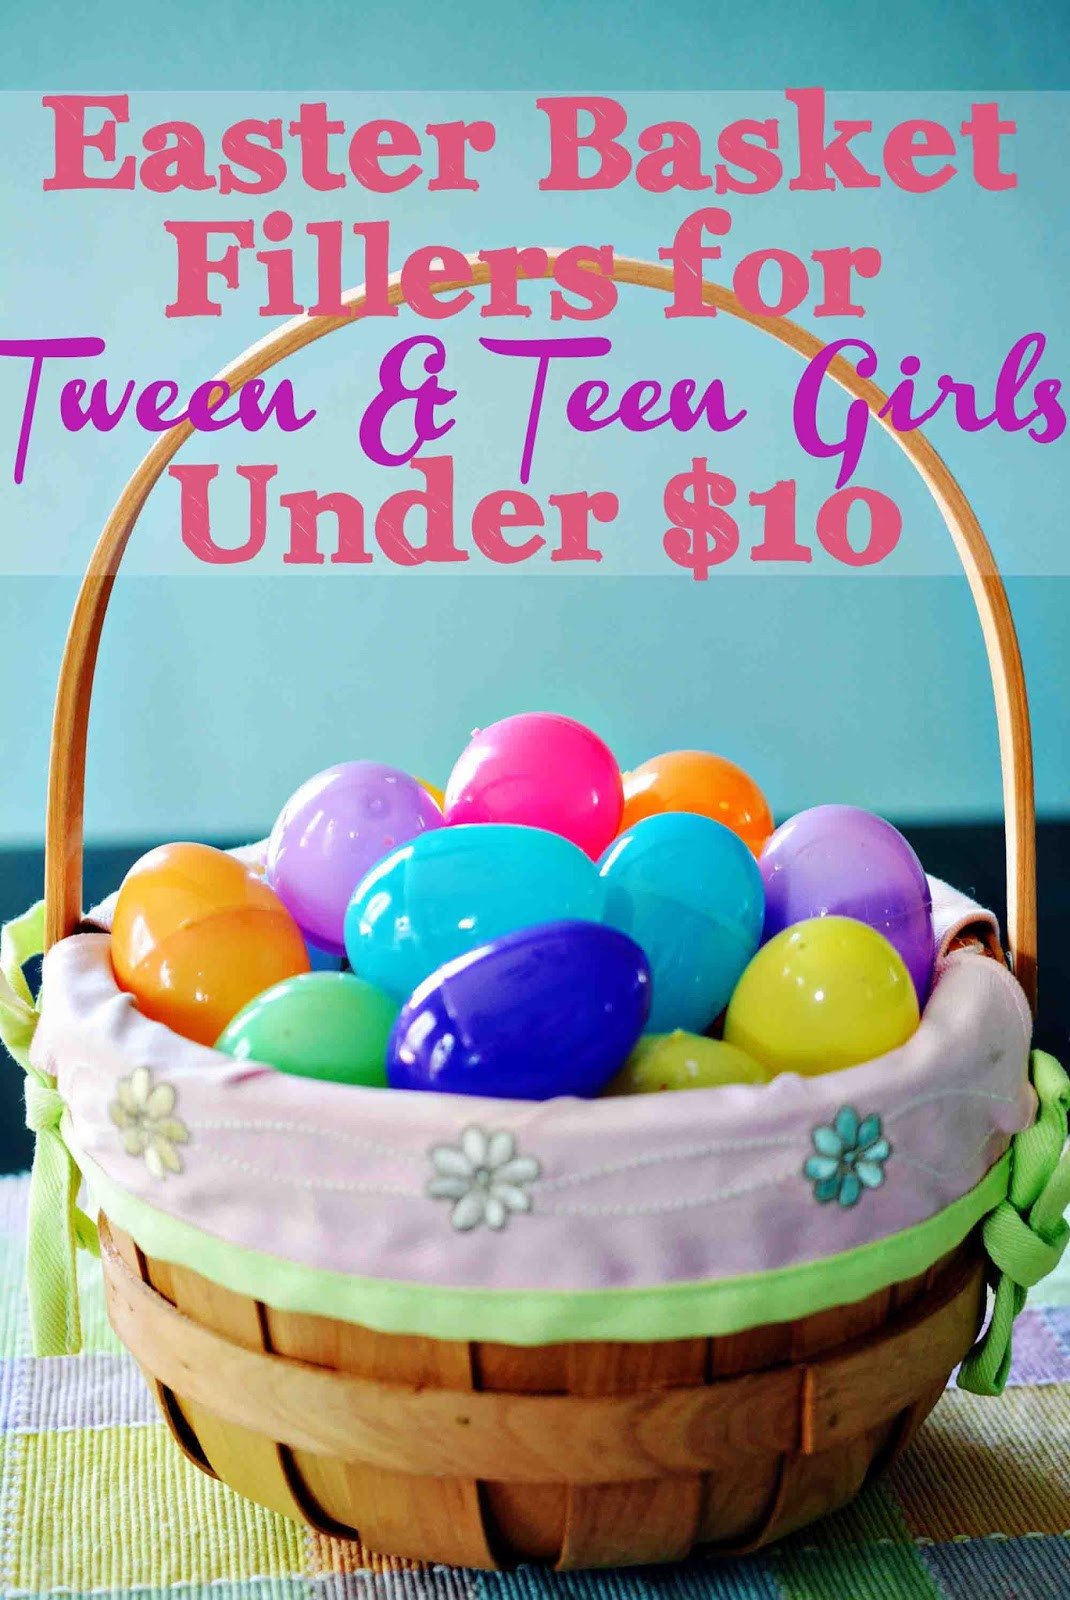 Easter Gift Ideas For Teenage Girl
 Theresa s Mixed Nuts Tween & Teen Girl Easter Basket